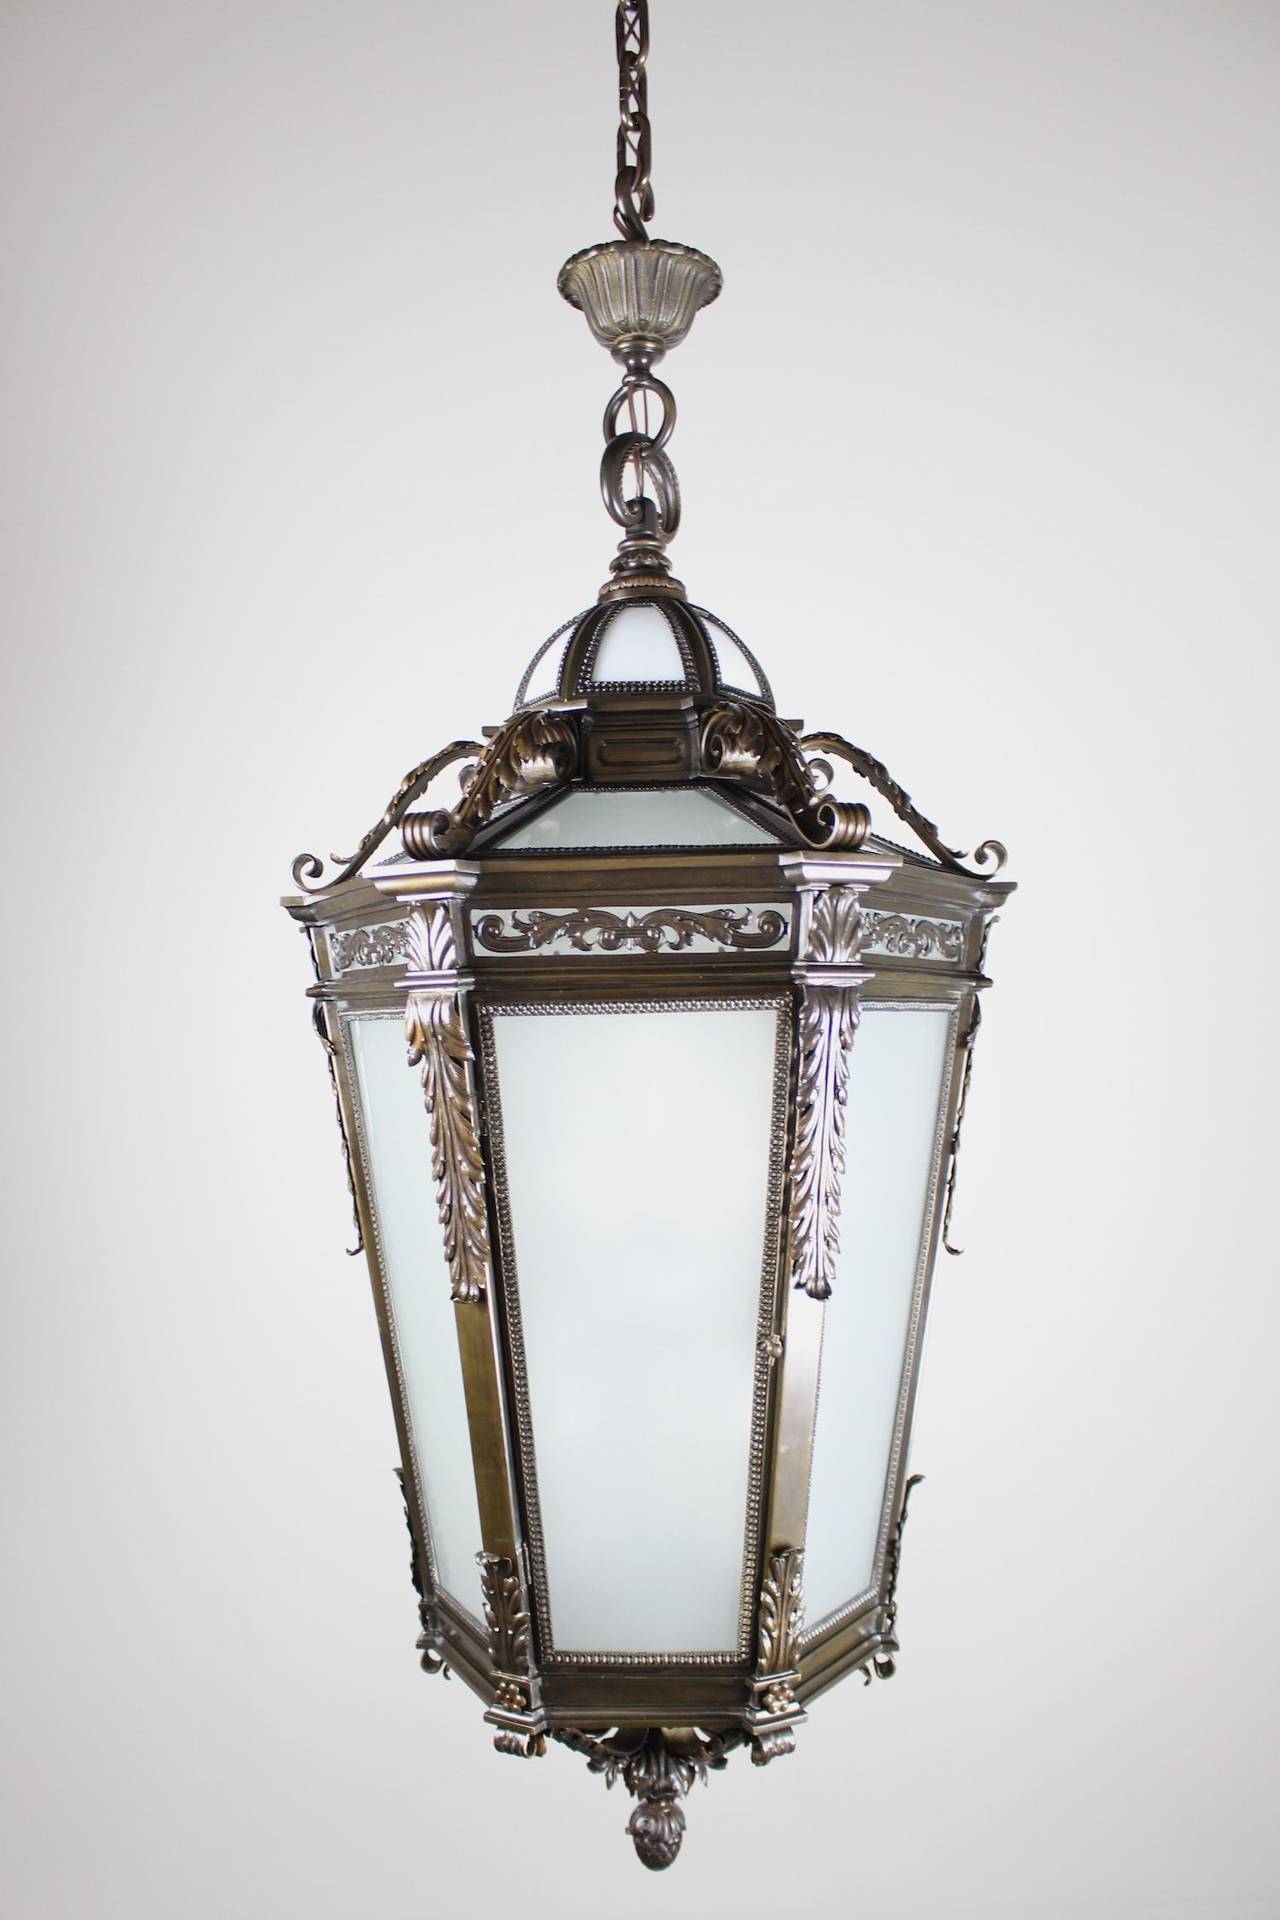 Neoclassical Revival Commercial E. F. Caldwell Lantern  Circa 1905